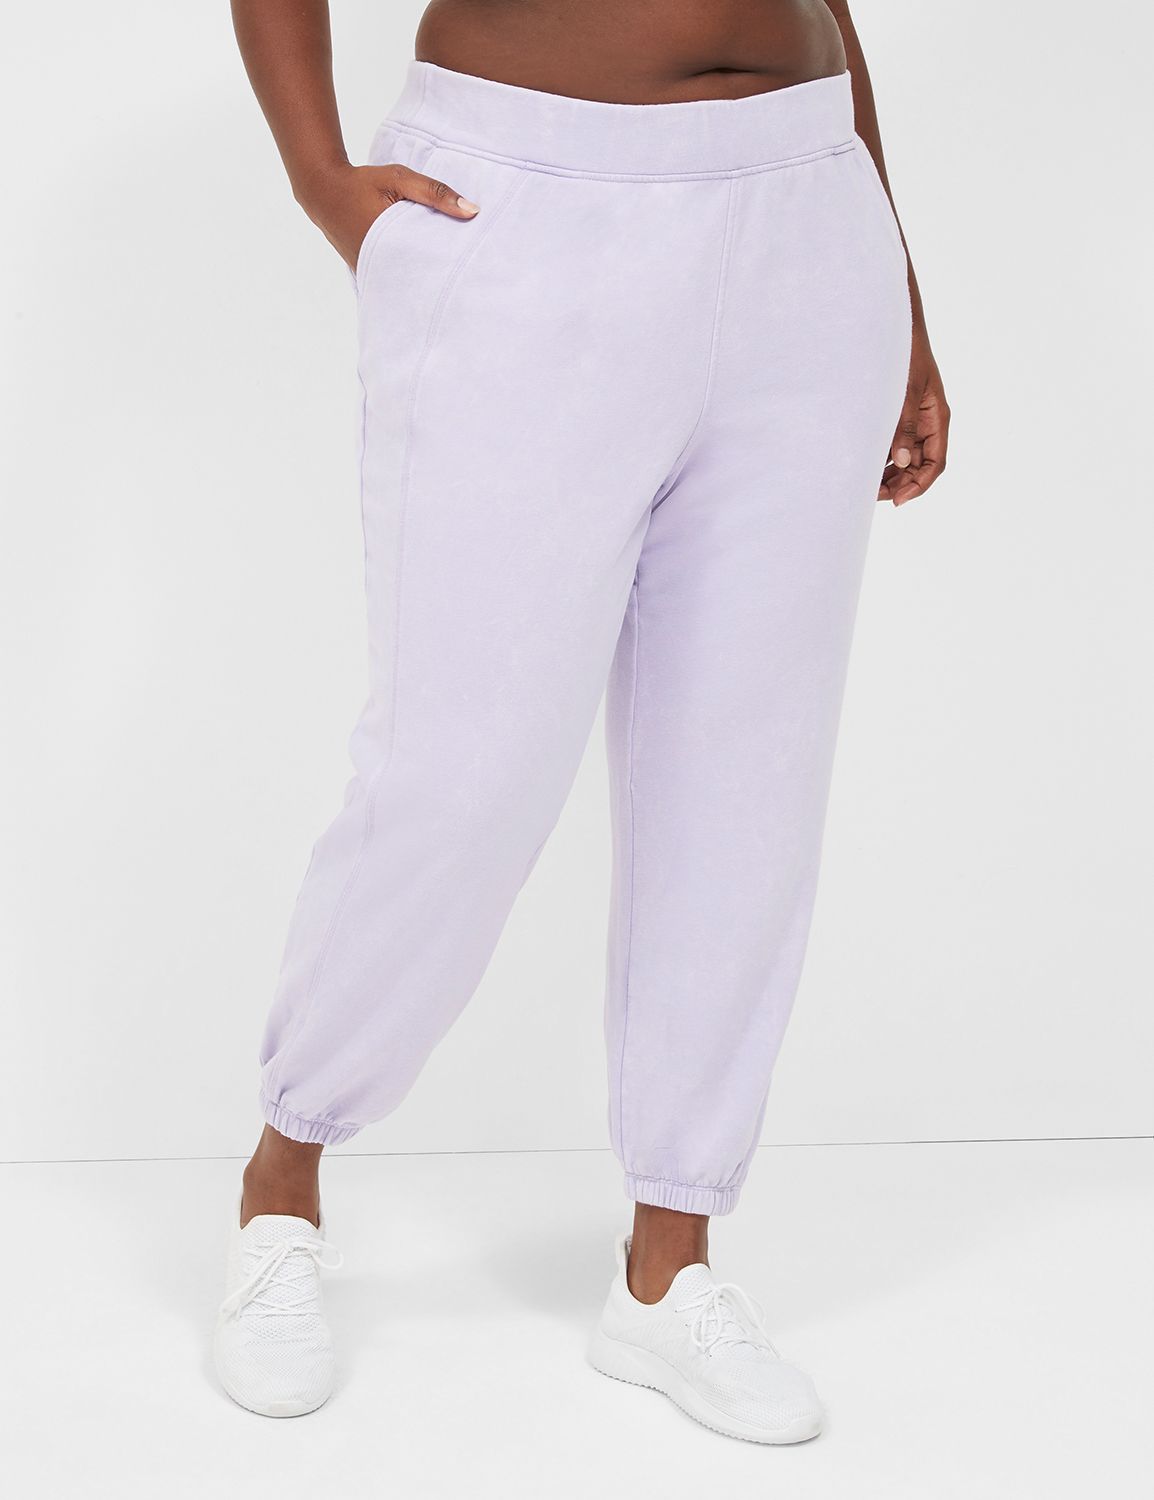  Lroplie Plus Size Pants for Women Cute Sweatpants for